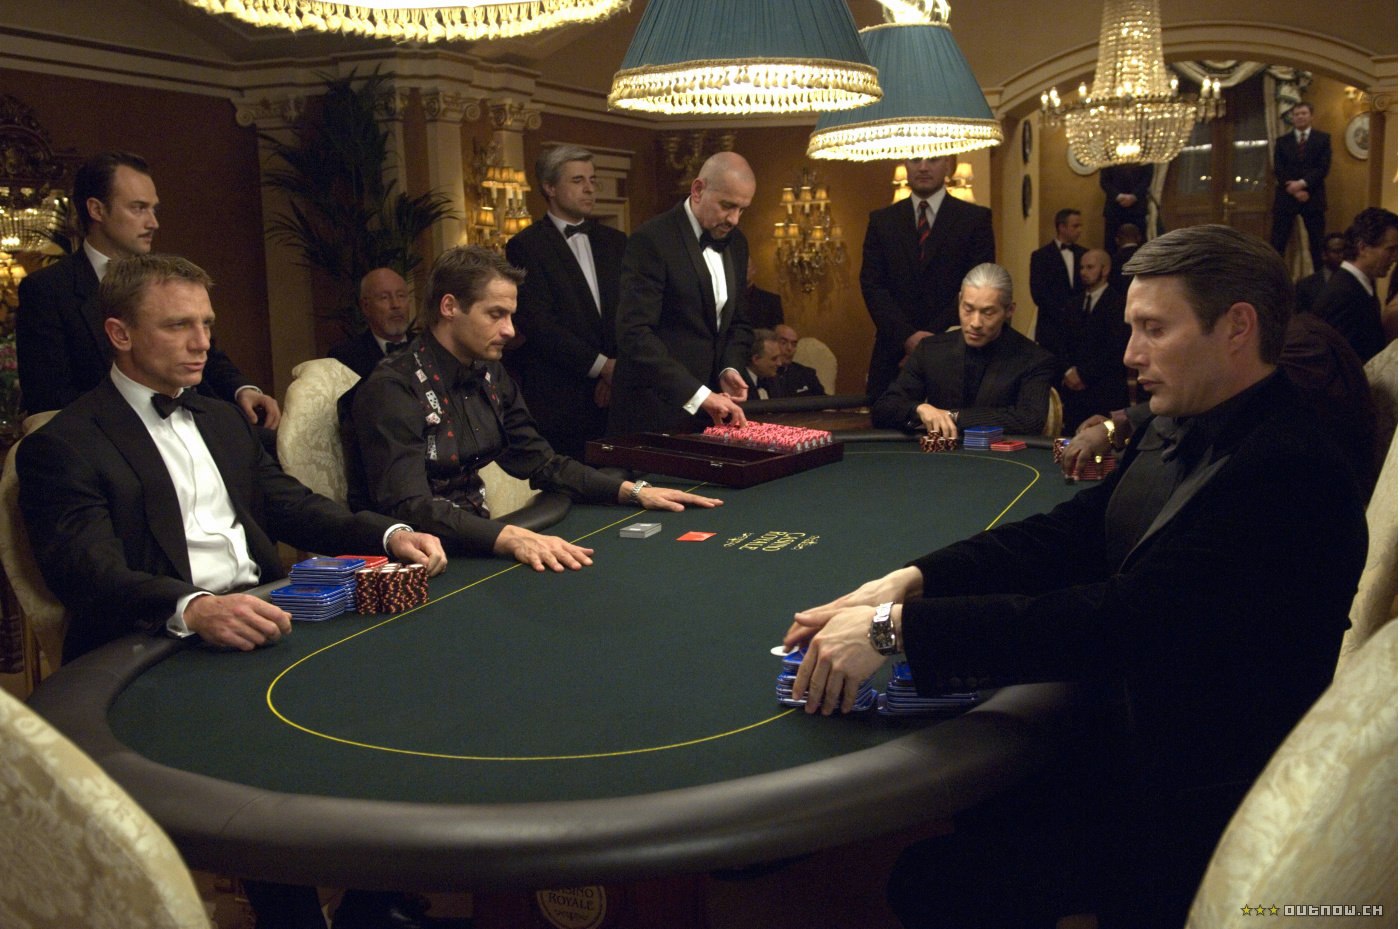 casino royale film 2006